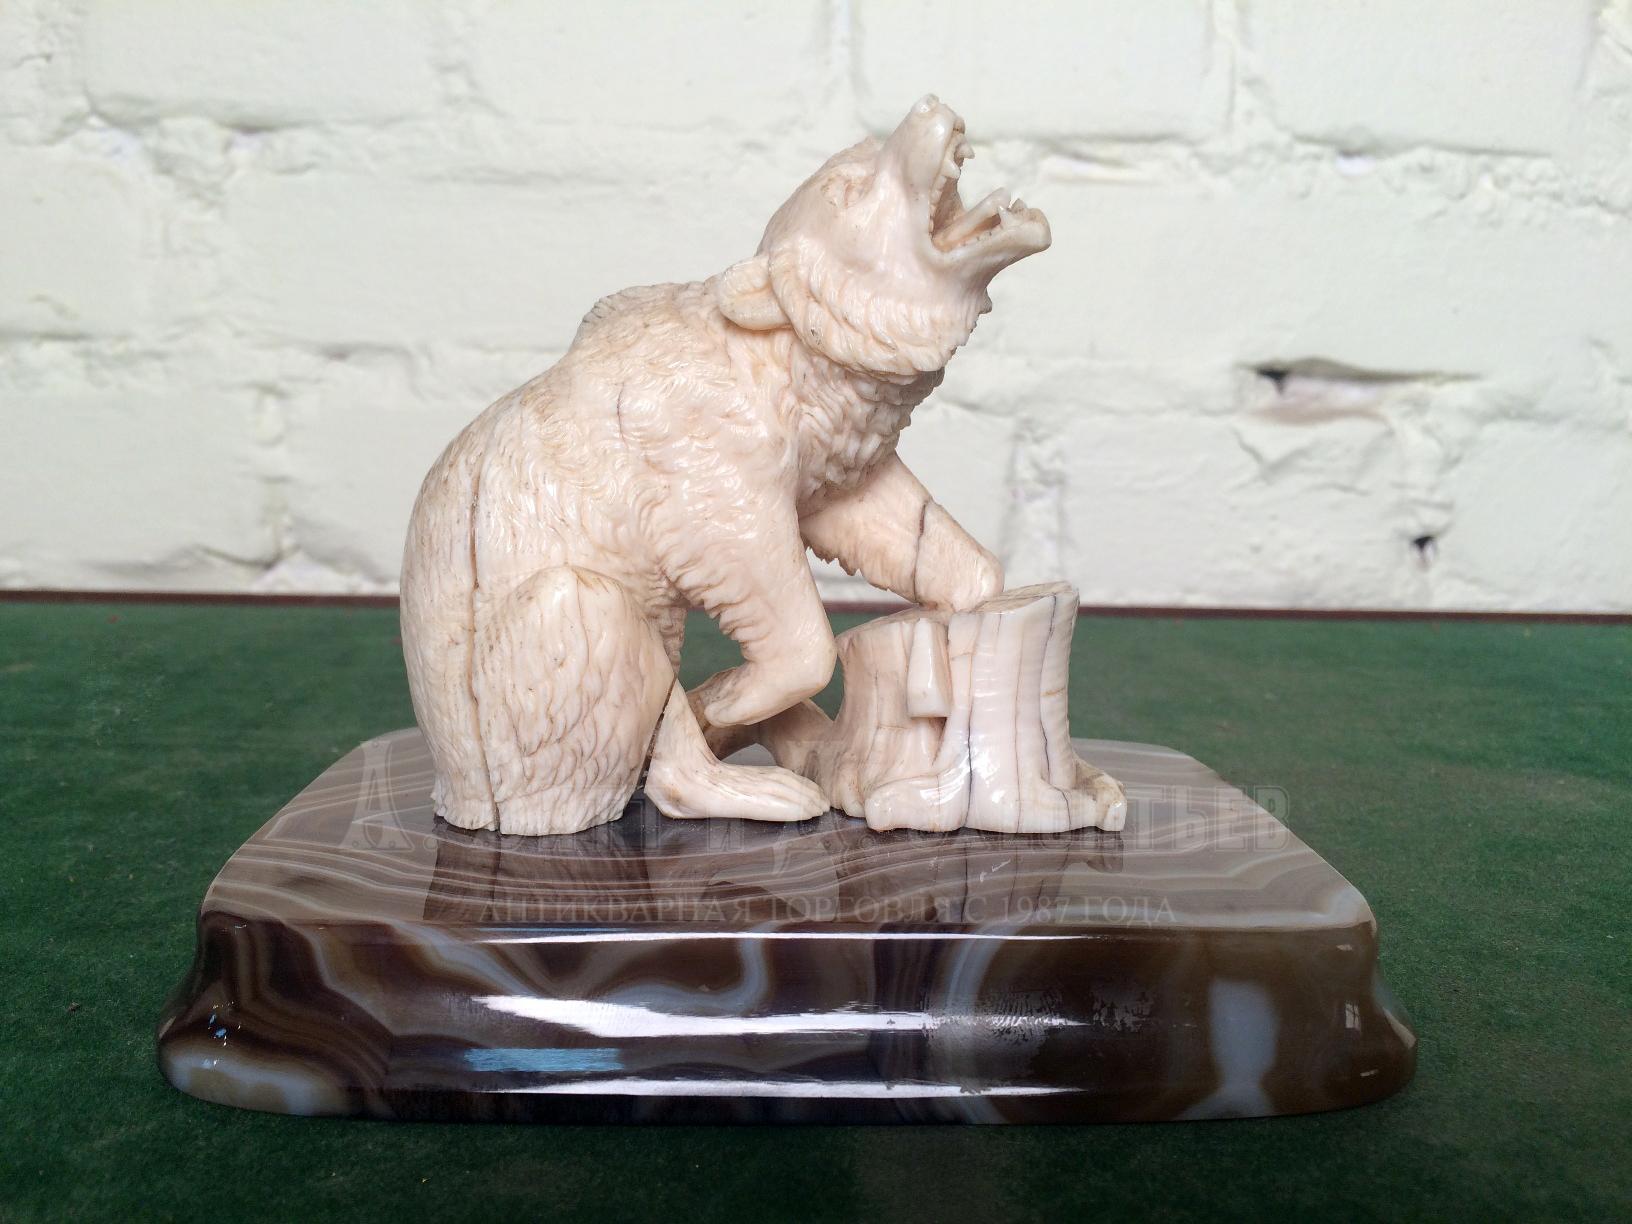 Статуэтка костяная - Пойманный медведь